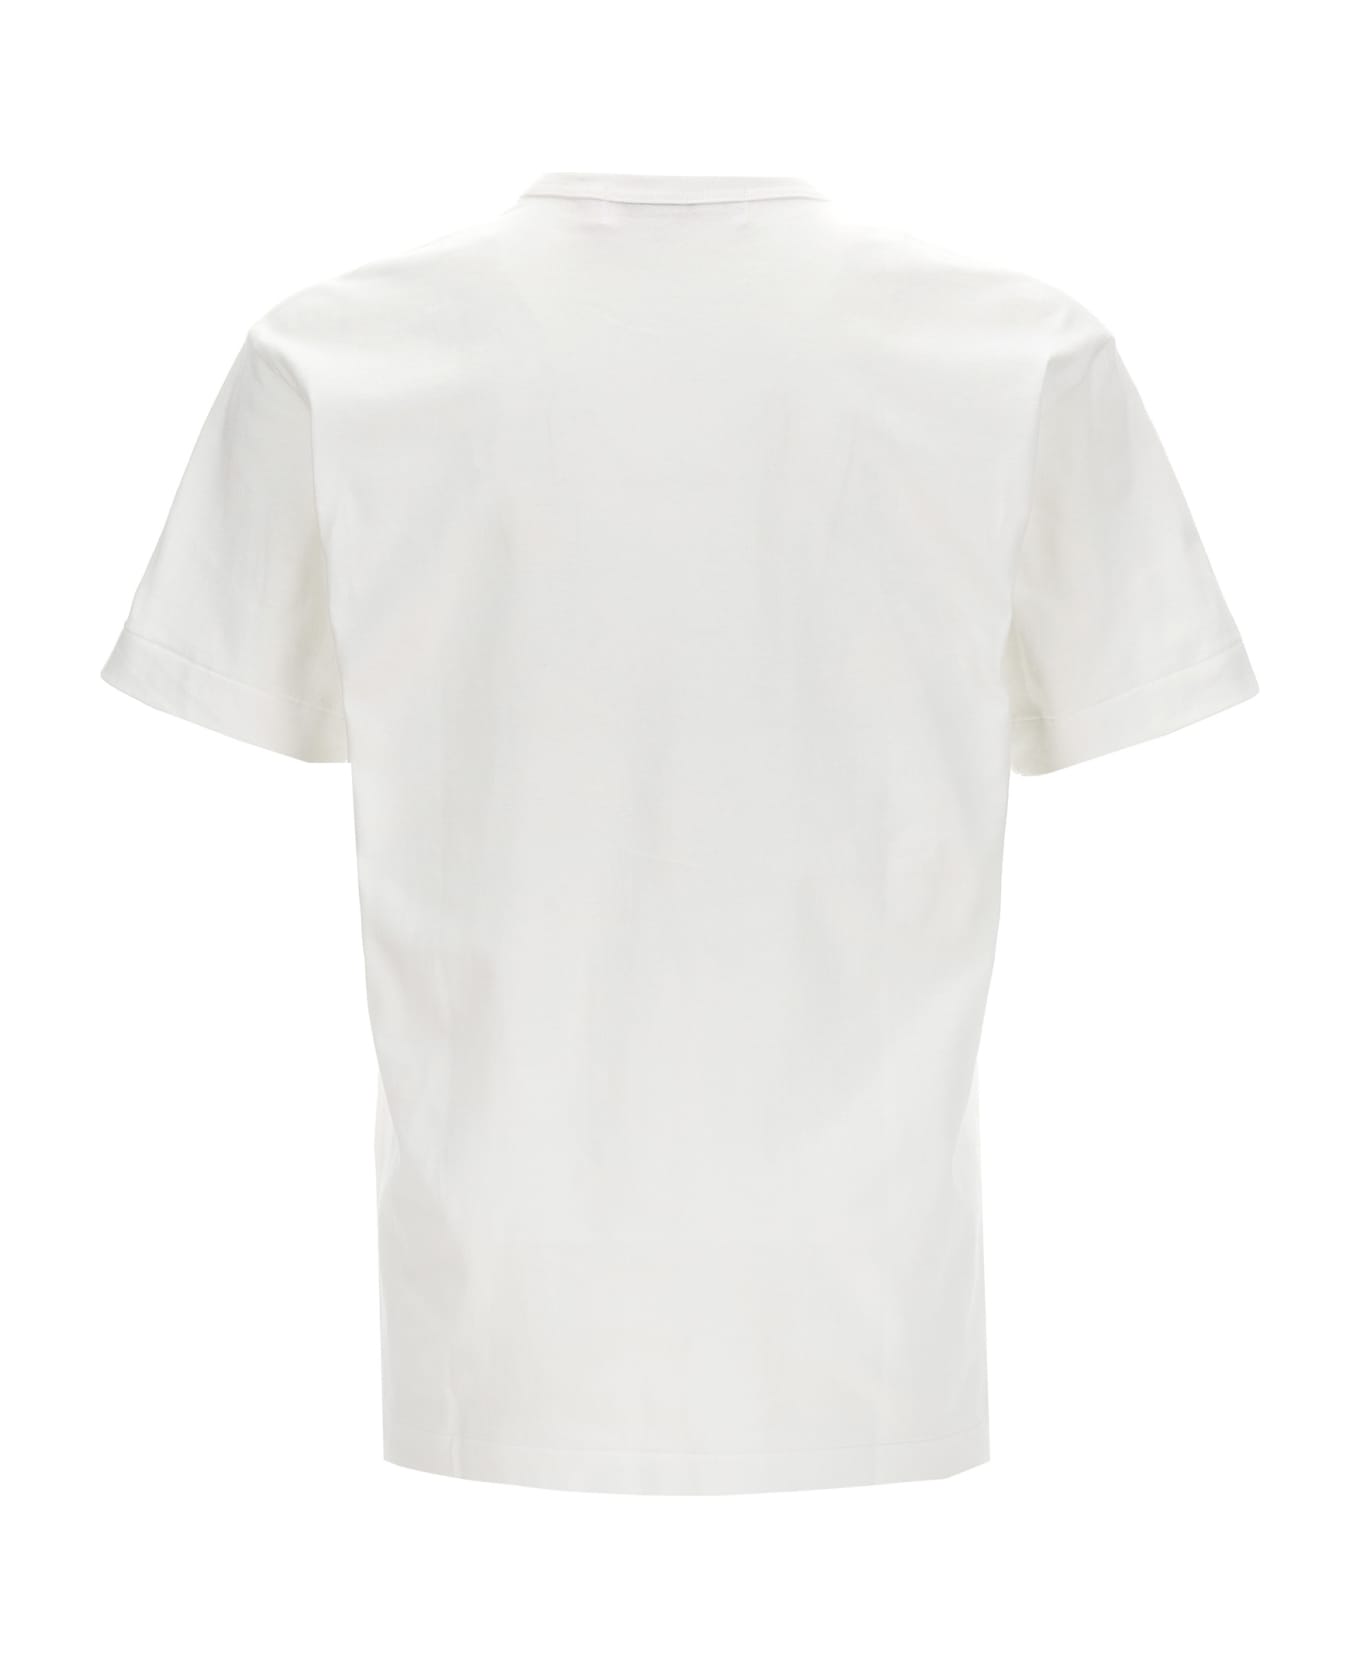 Comme des Garçons Play Logo Print T-shirt - White/Black